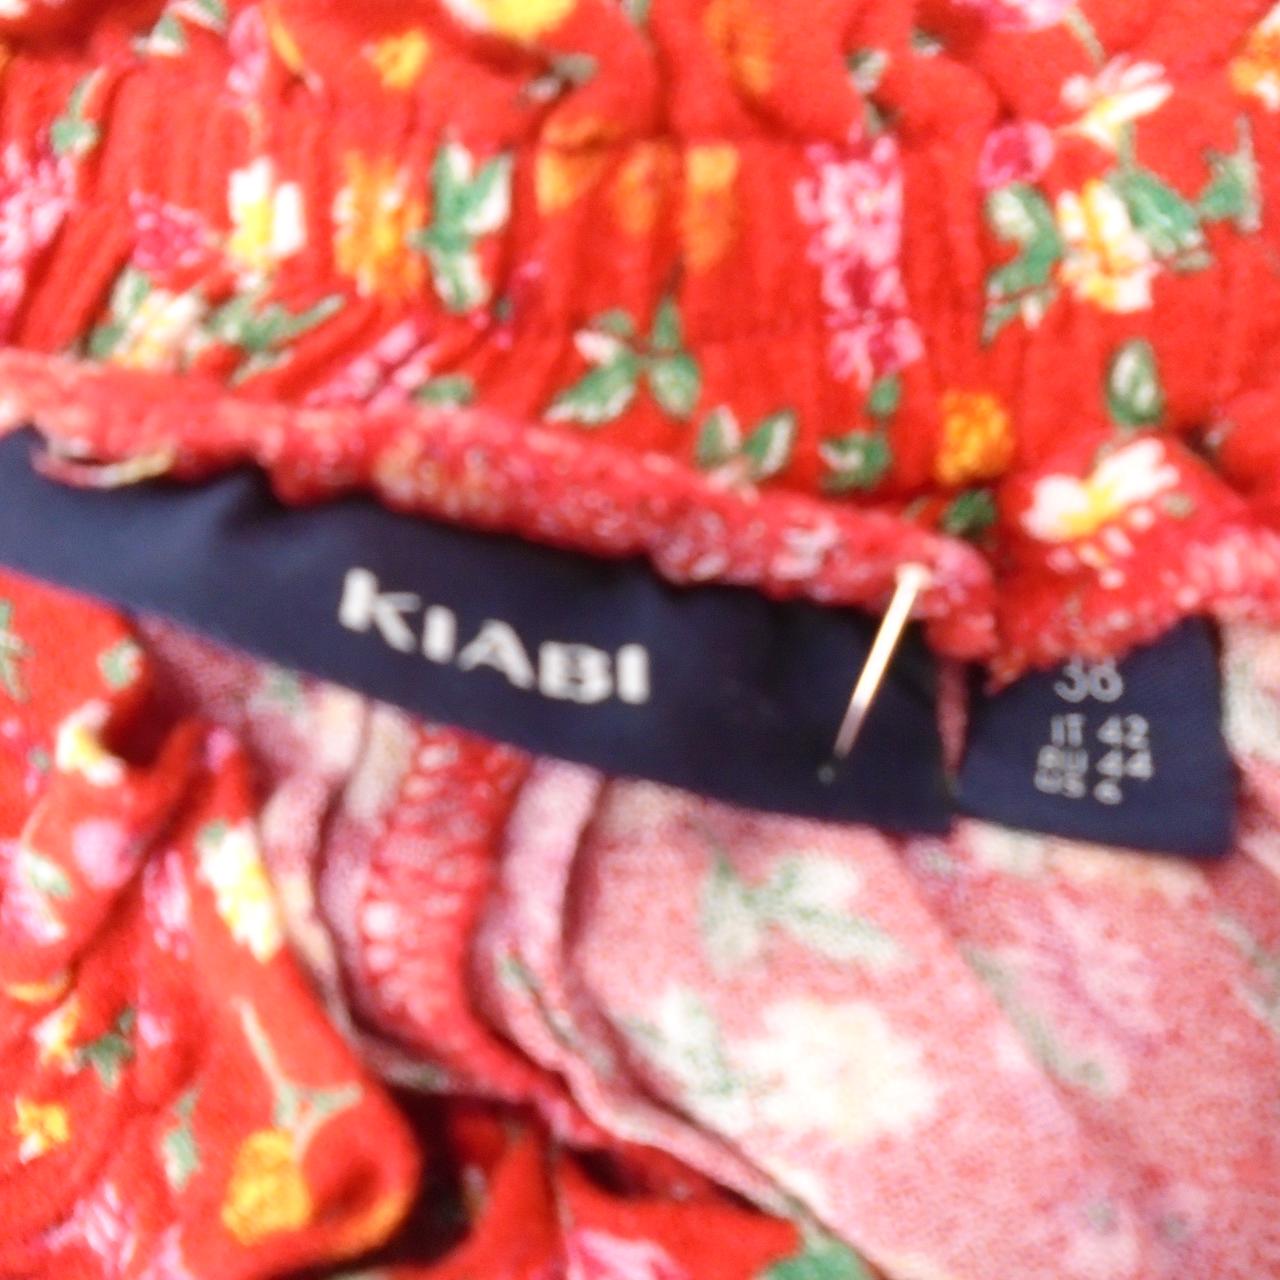 Falda Mujer Kiabi. Multicolor. M. Usado. Bien